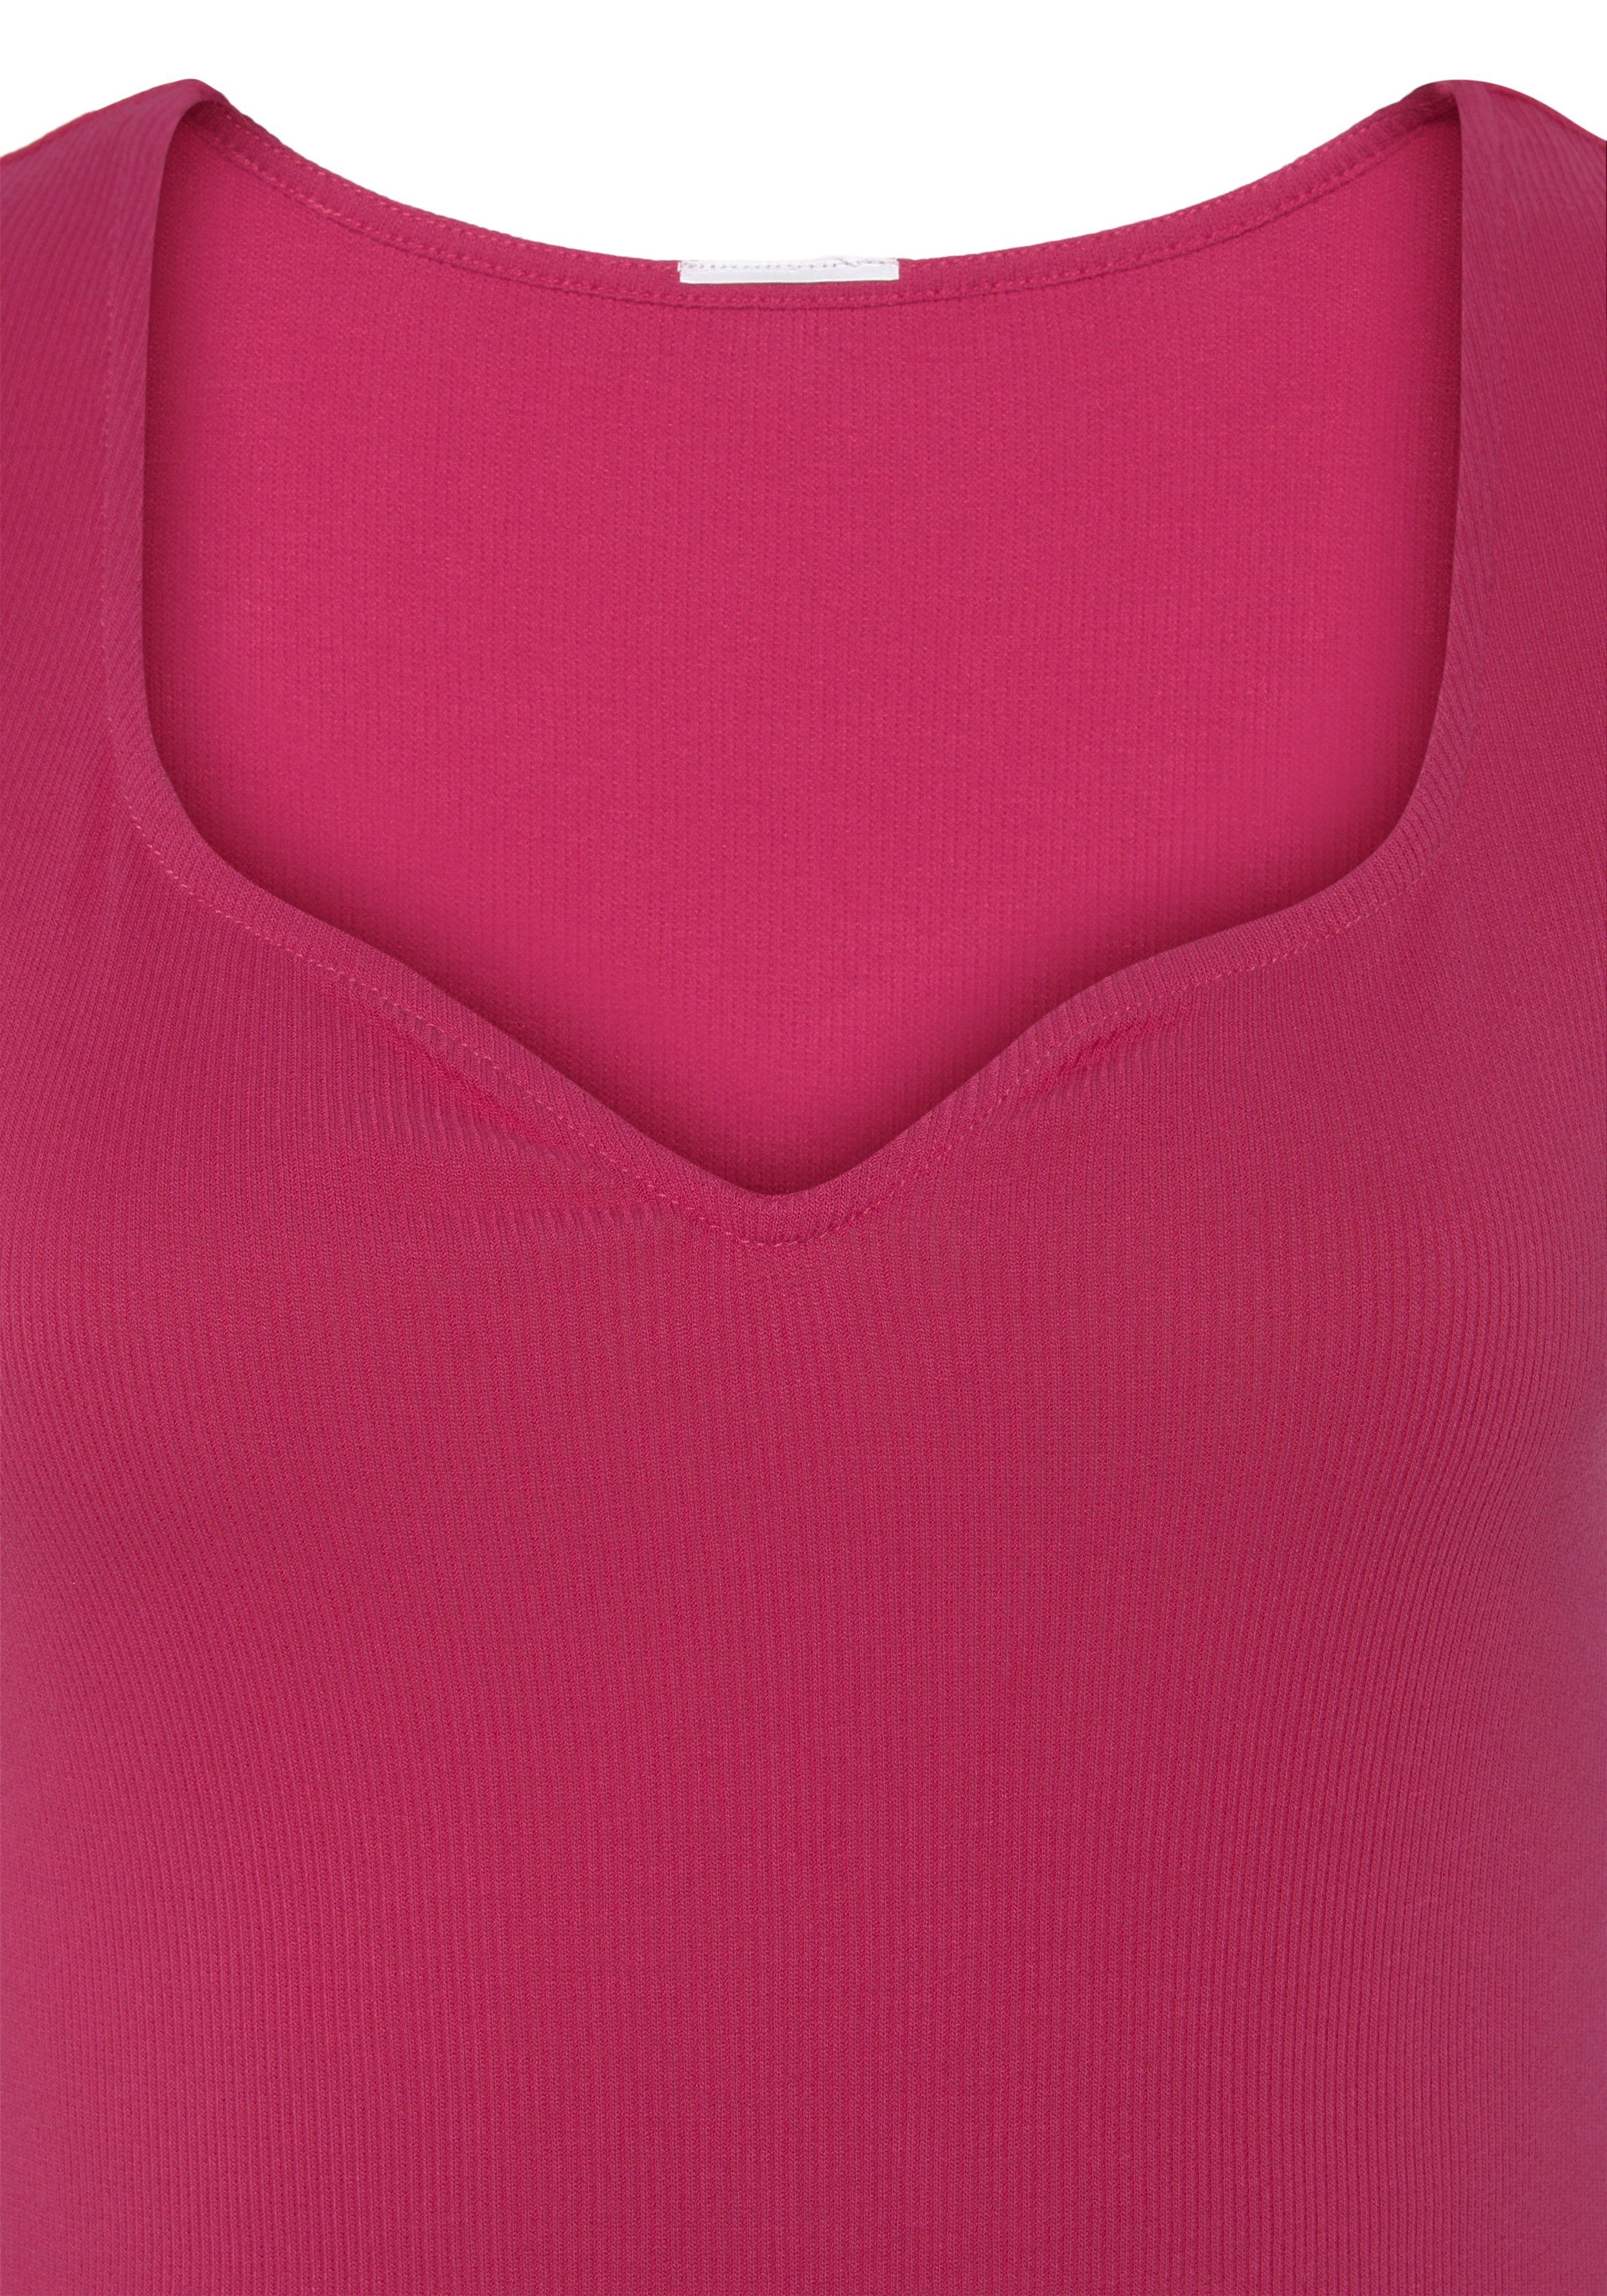 herzförmigen (1-tlg) Vivance mit T-Shirt Dekolleté pink